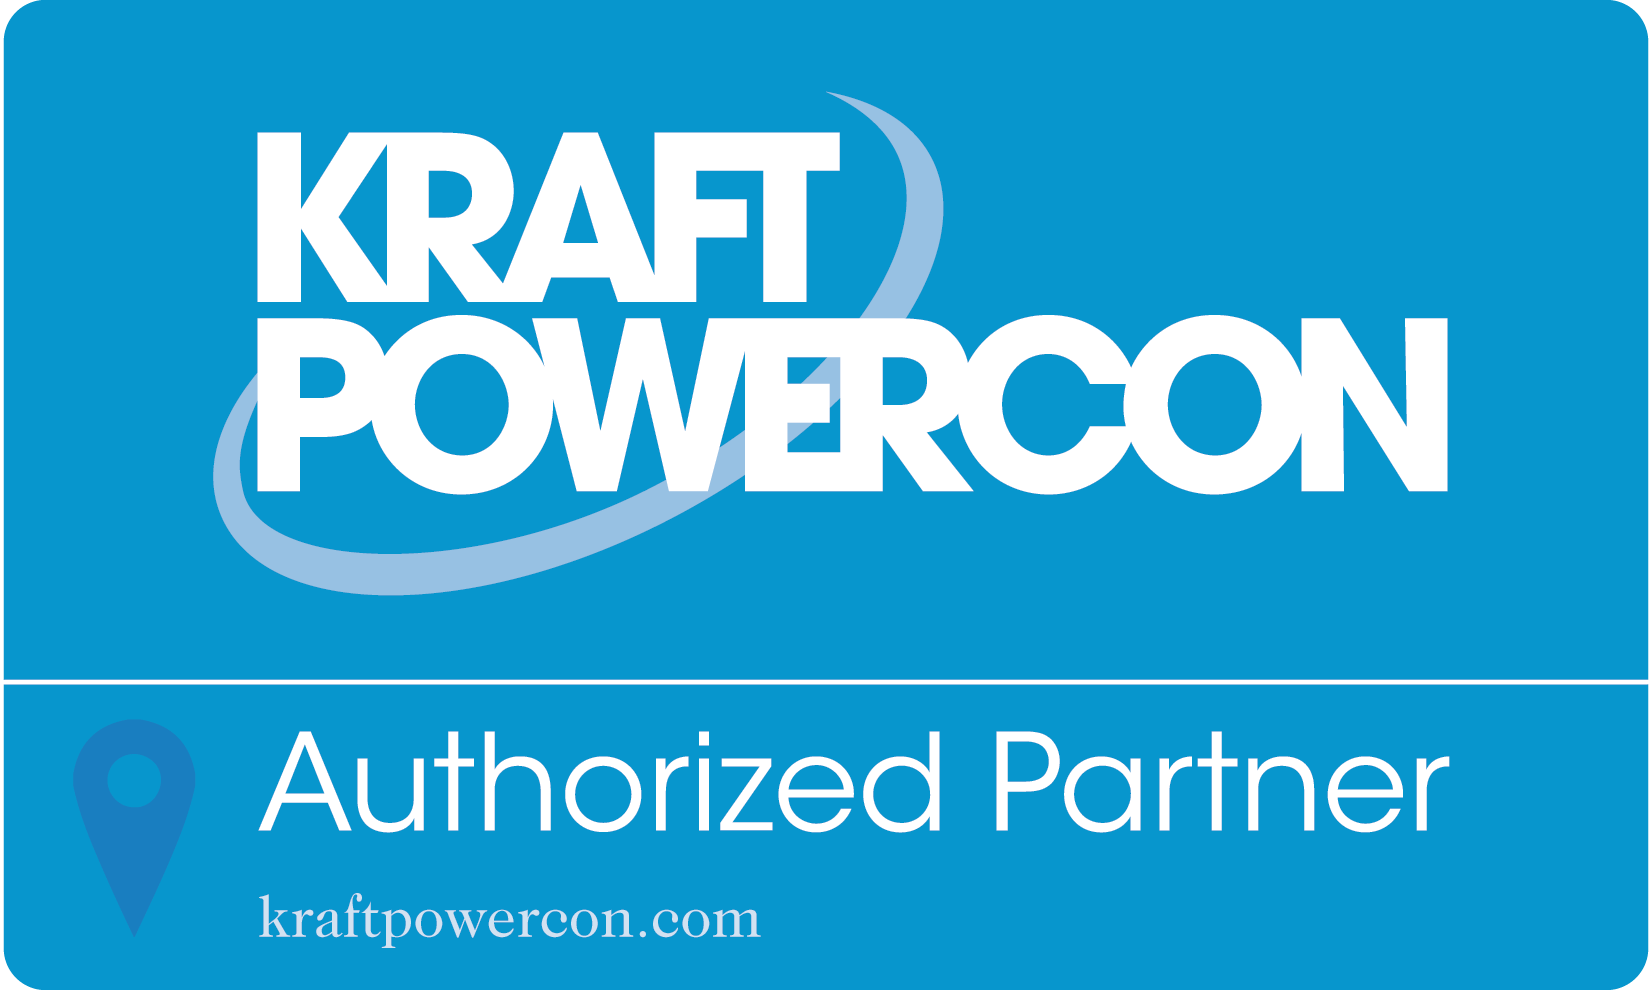 Kraftpowercon partner